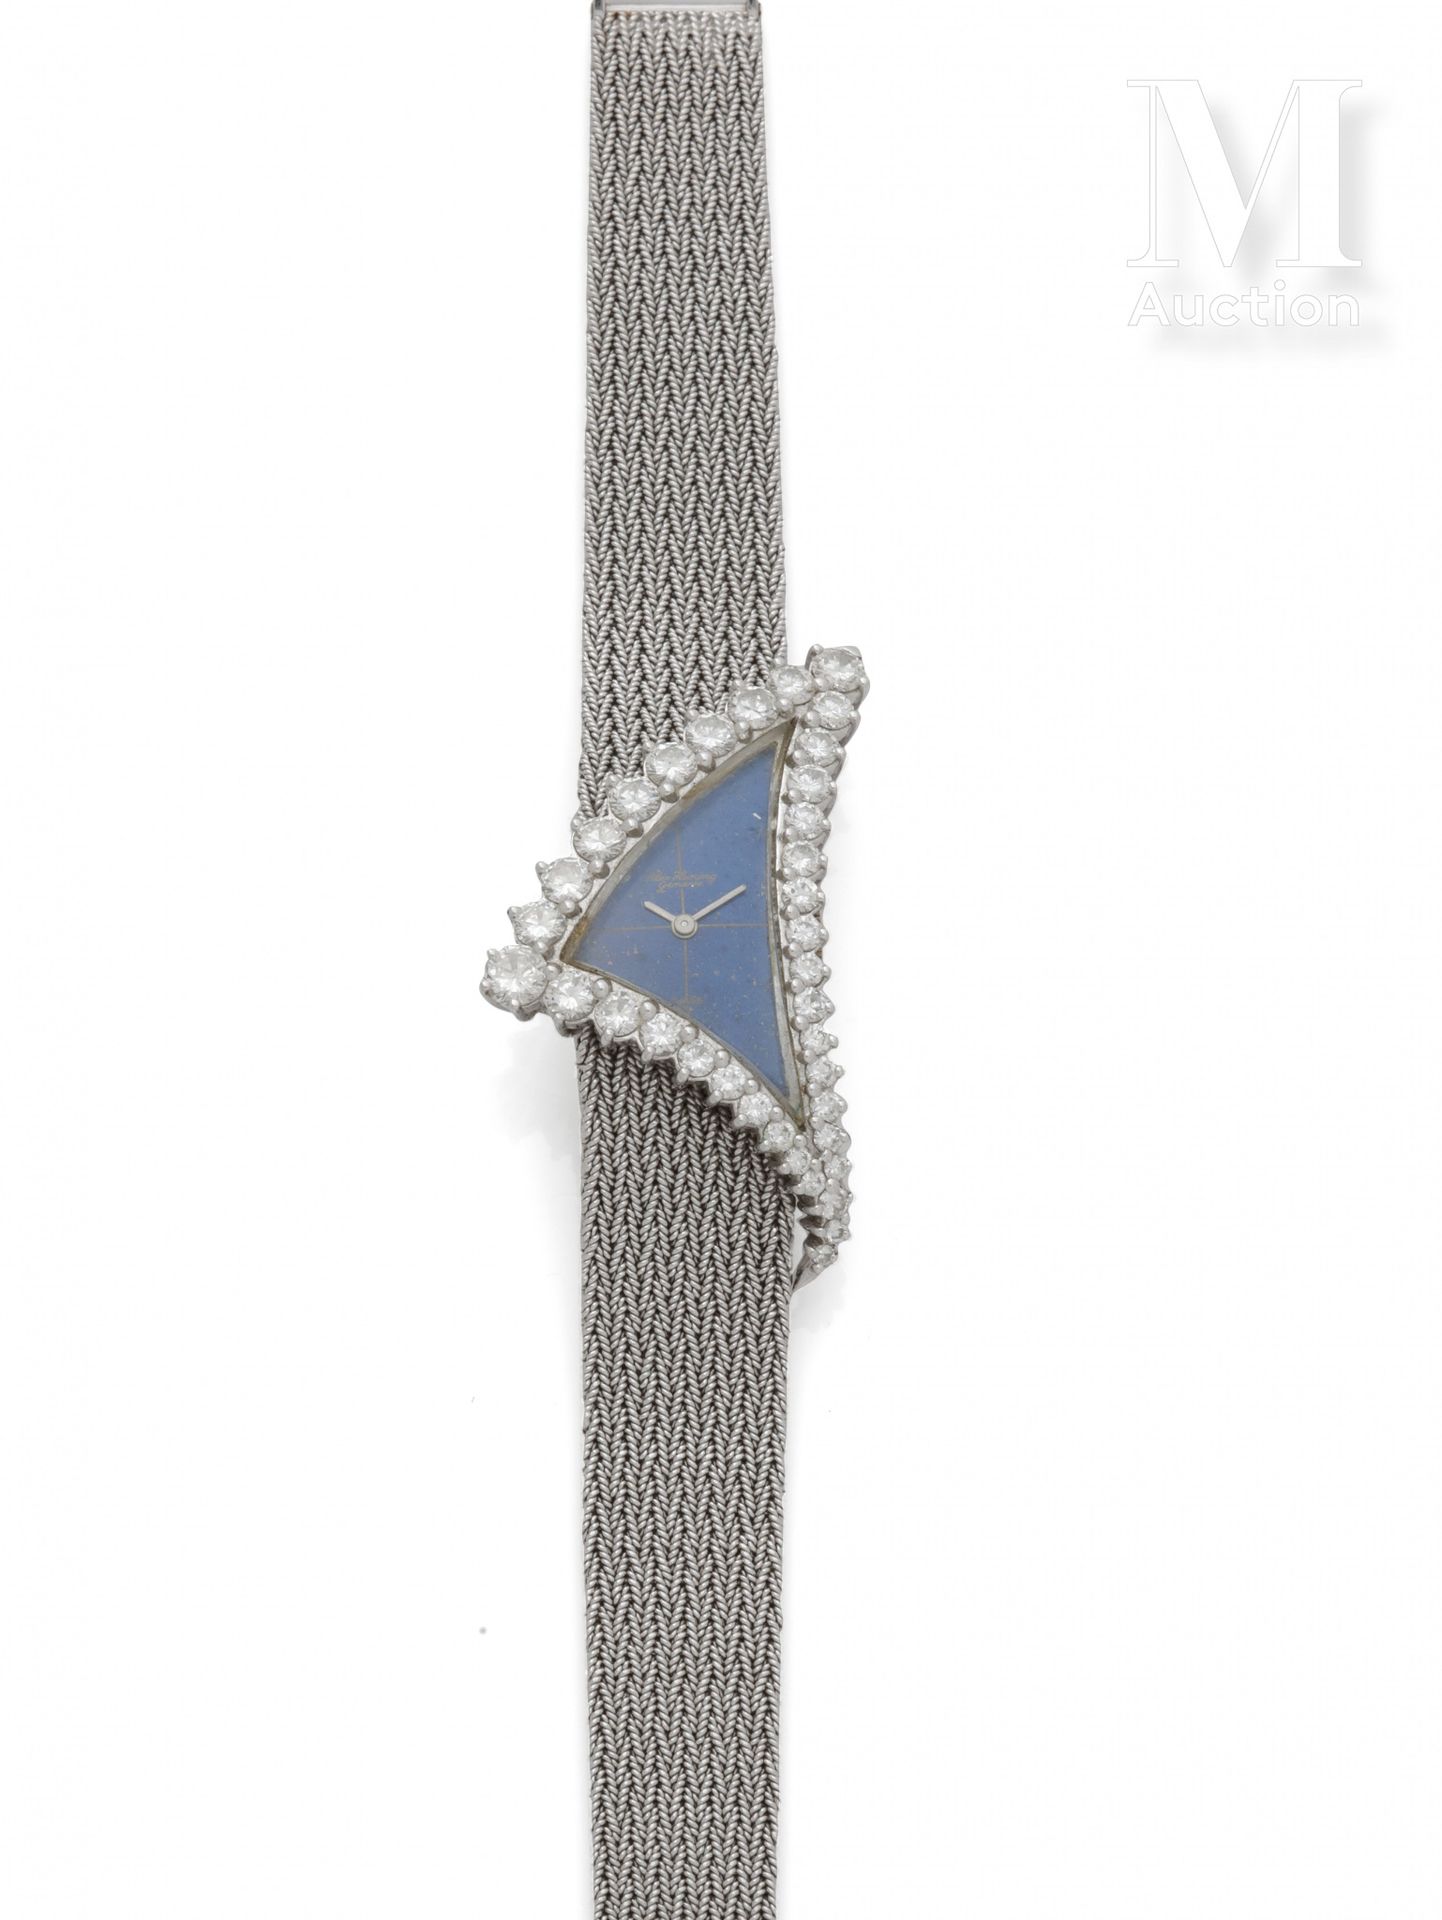 ALEX HUNING Woman's watch

Circa 1970

18-carat white gold case set with diamond&hellip;